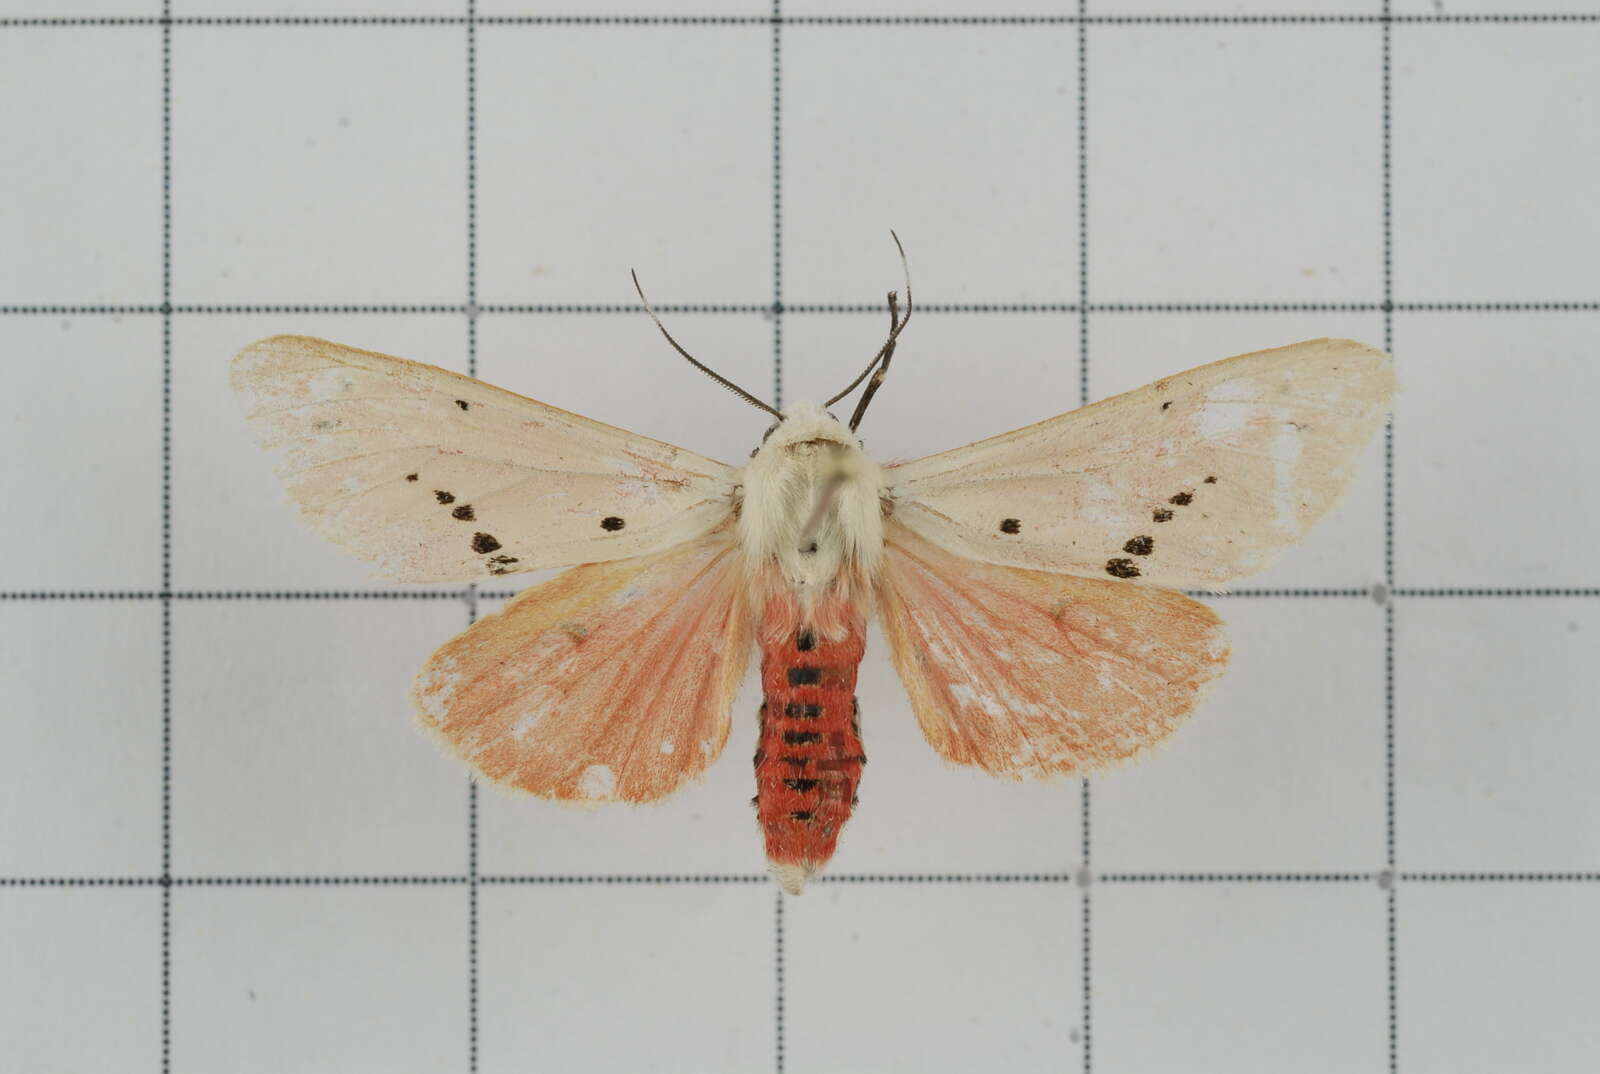 Image of Spilarctia subcarnea (Walker 1855)